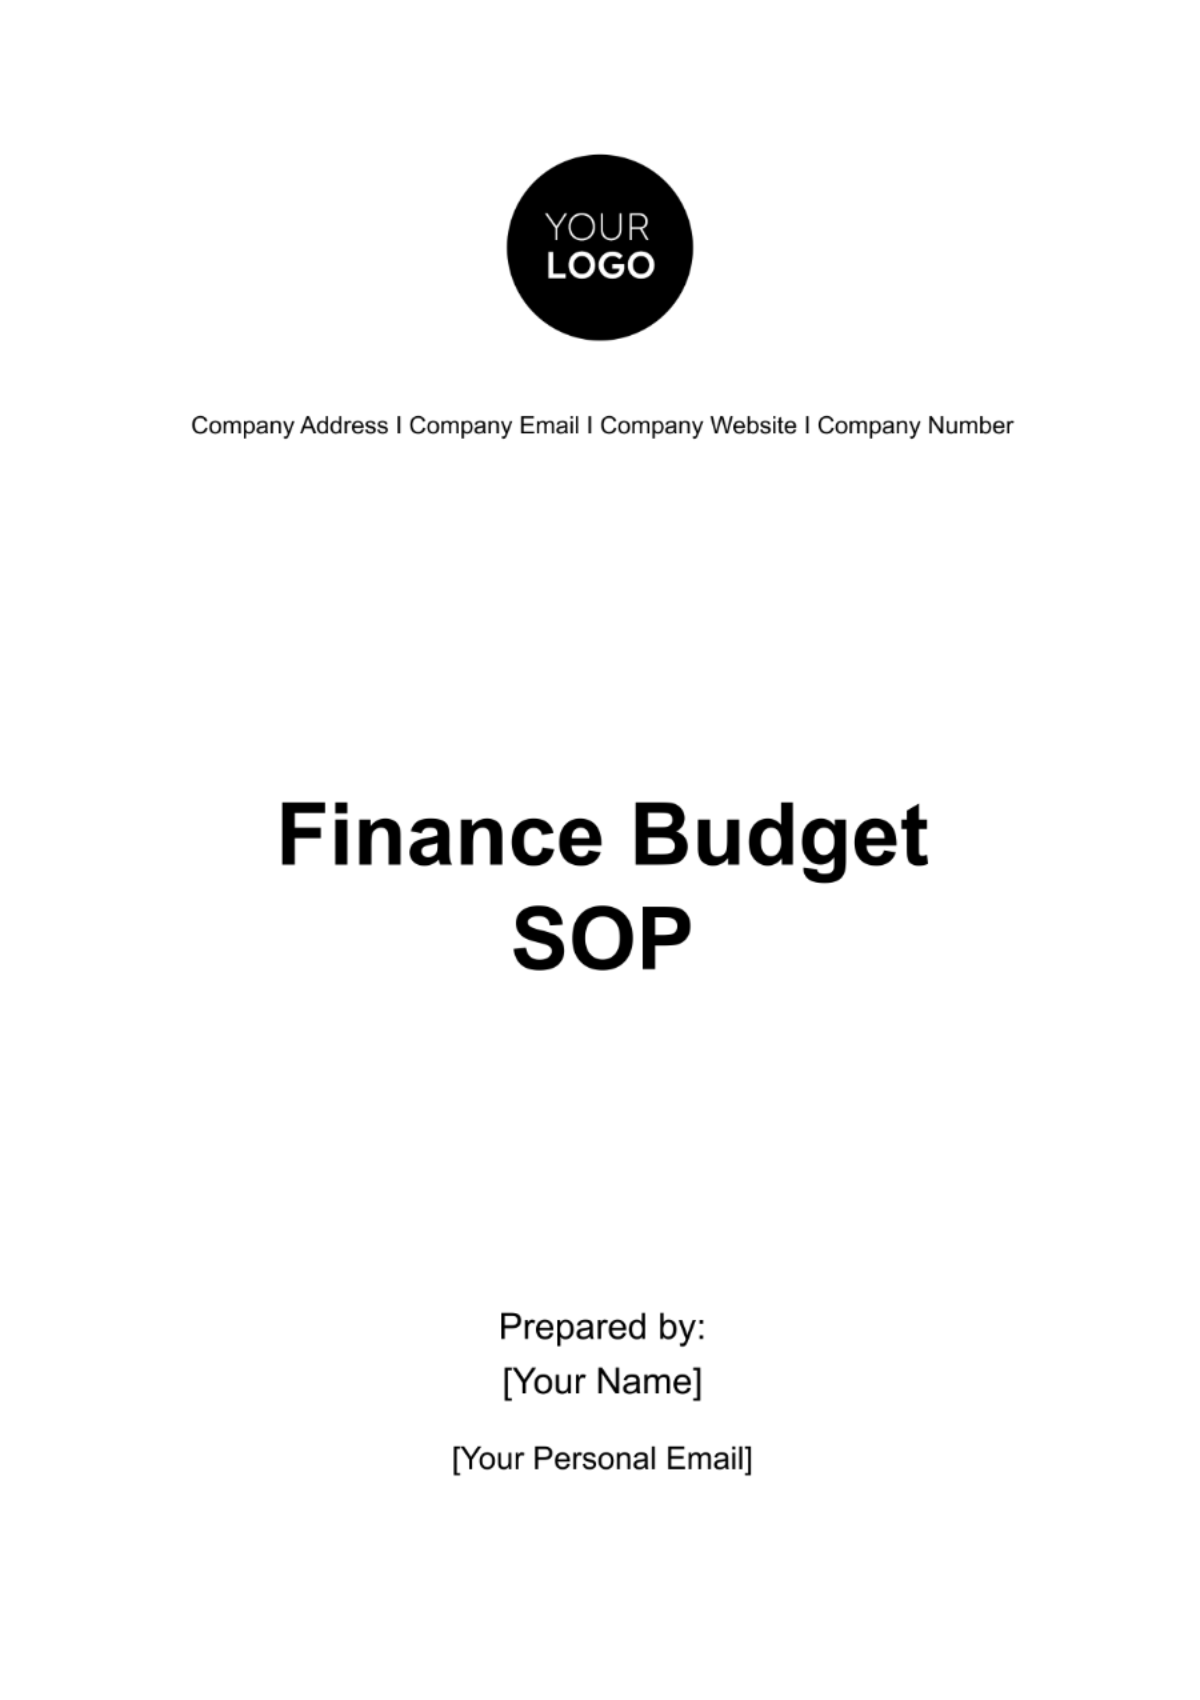 Free Finance Budget SOP Template